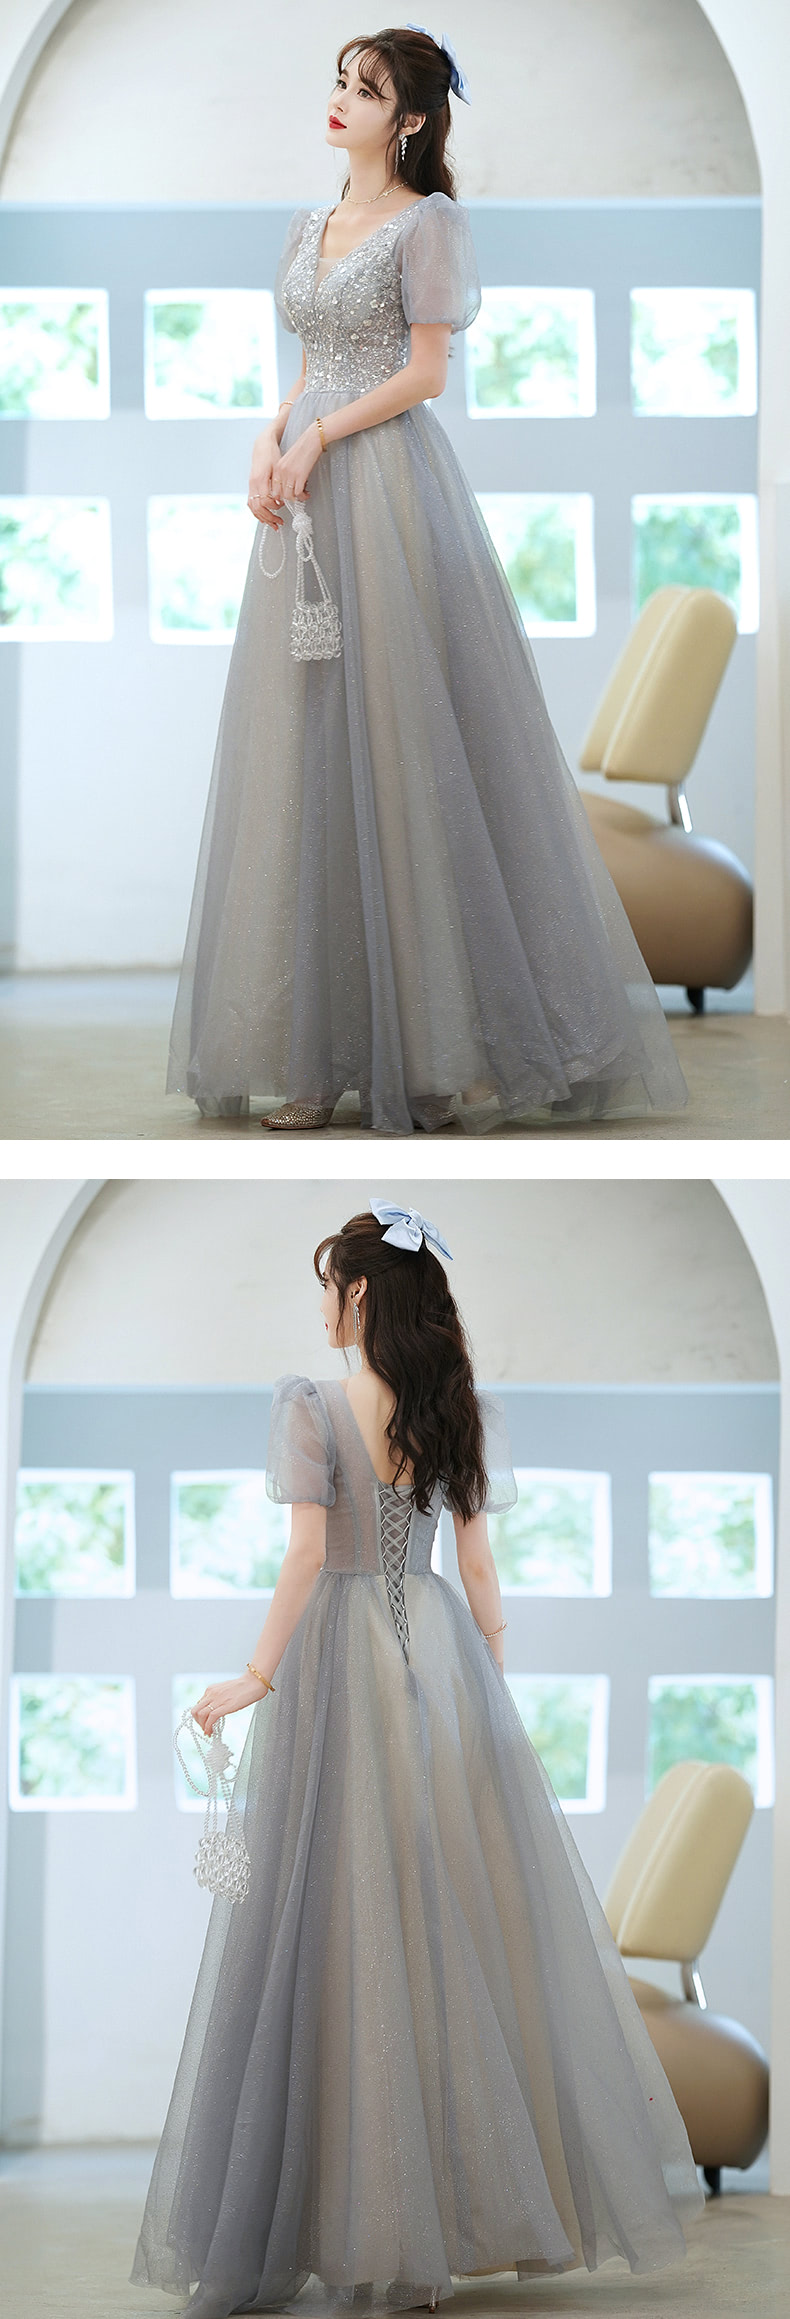 Trendy-Light-Gray-Midi-Maxi-Party-Dress-Formal-Evening-Gown18.jpg